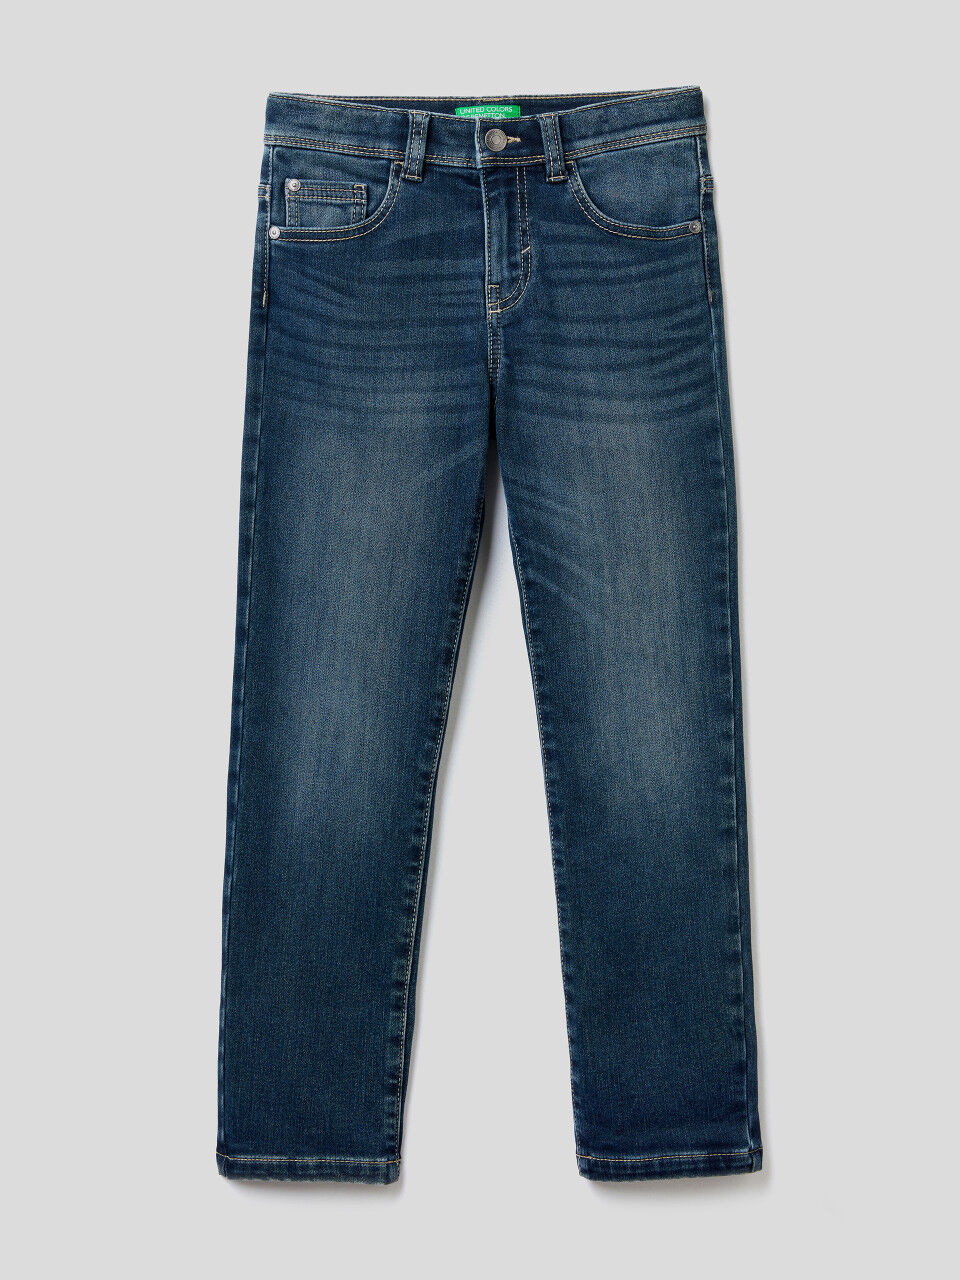 Jeans thermique coupe slim